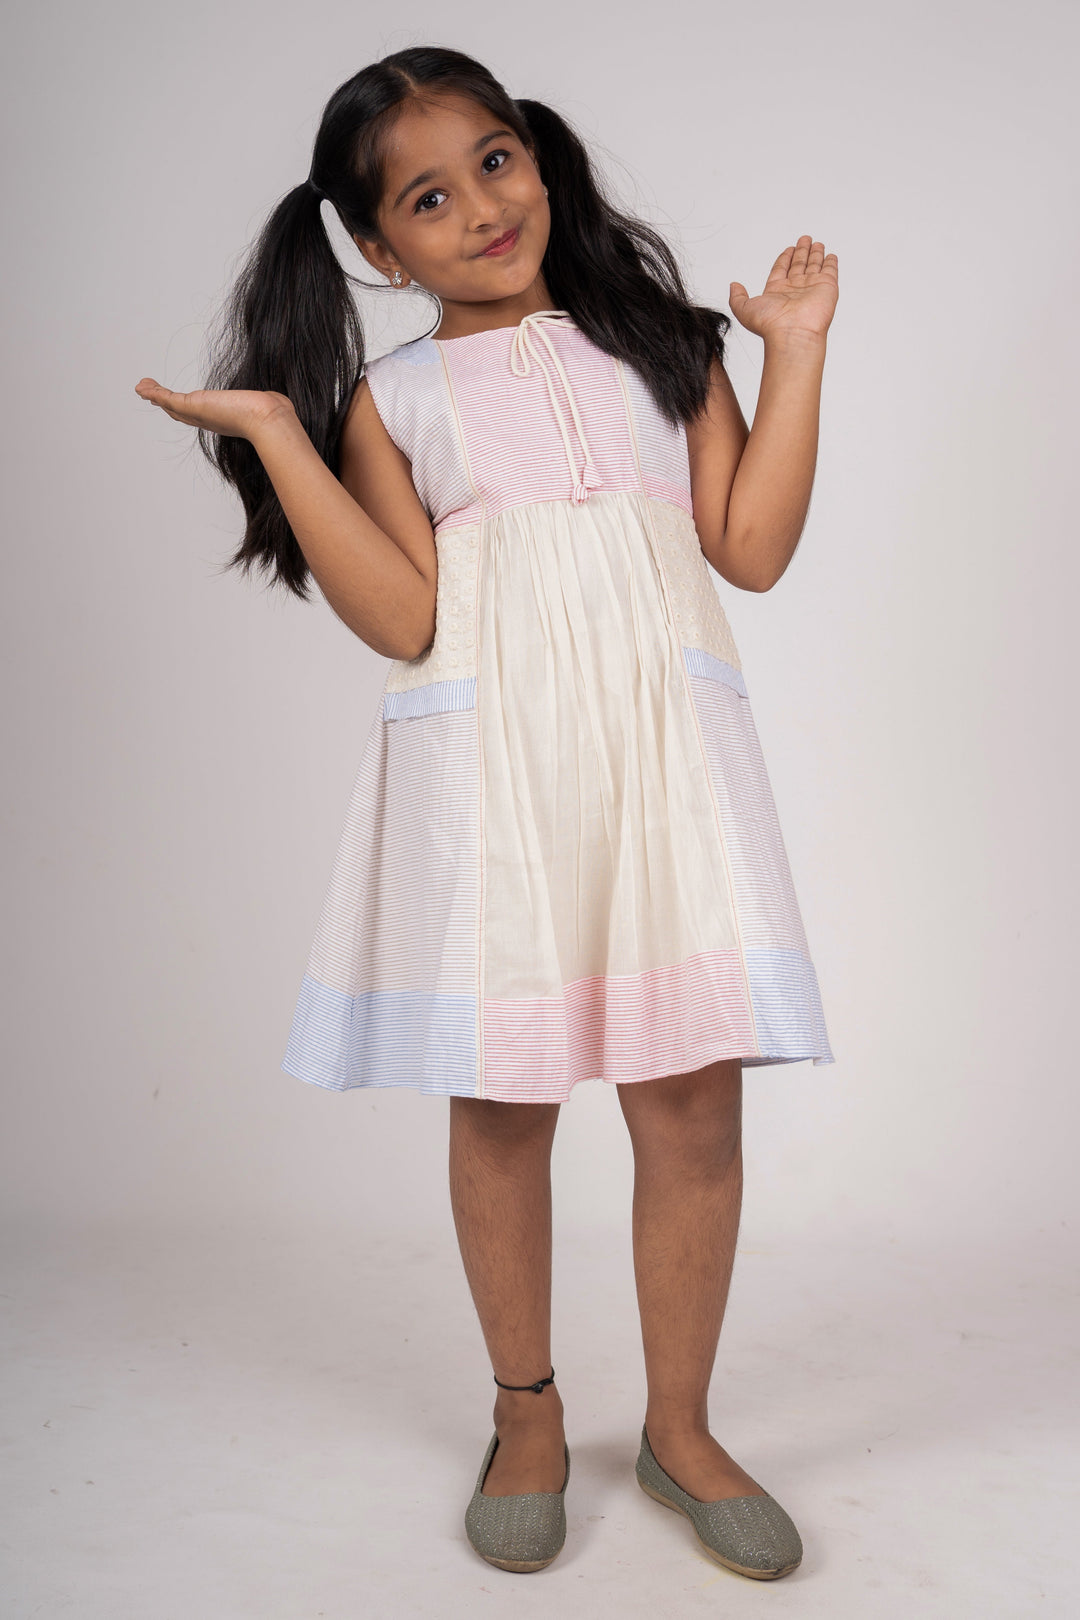 The Nesavu Frocks & Dresses Handloom Cotton Frocks For Kids Girls psr silks Nesavu 16 (1Y) / Pink GFC646